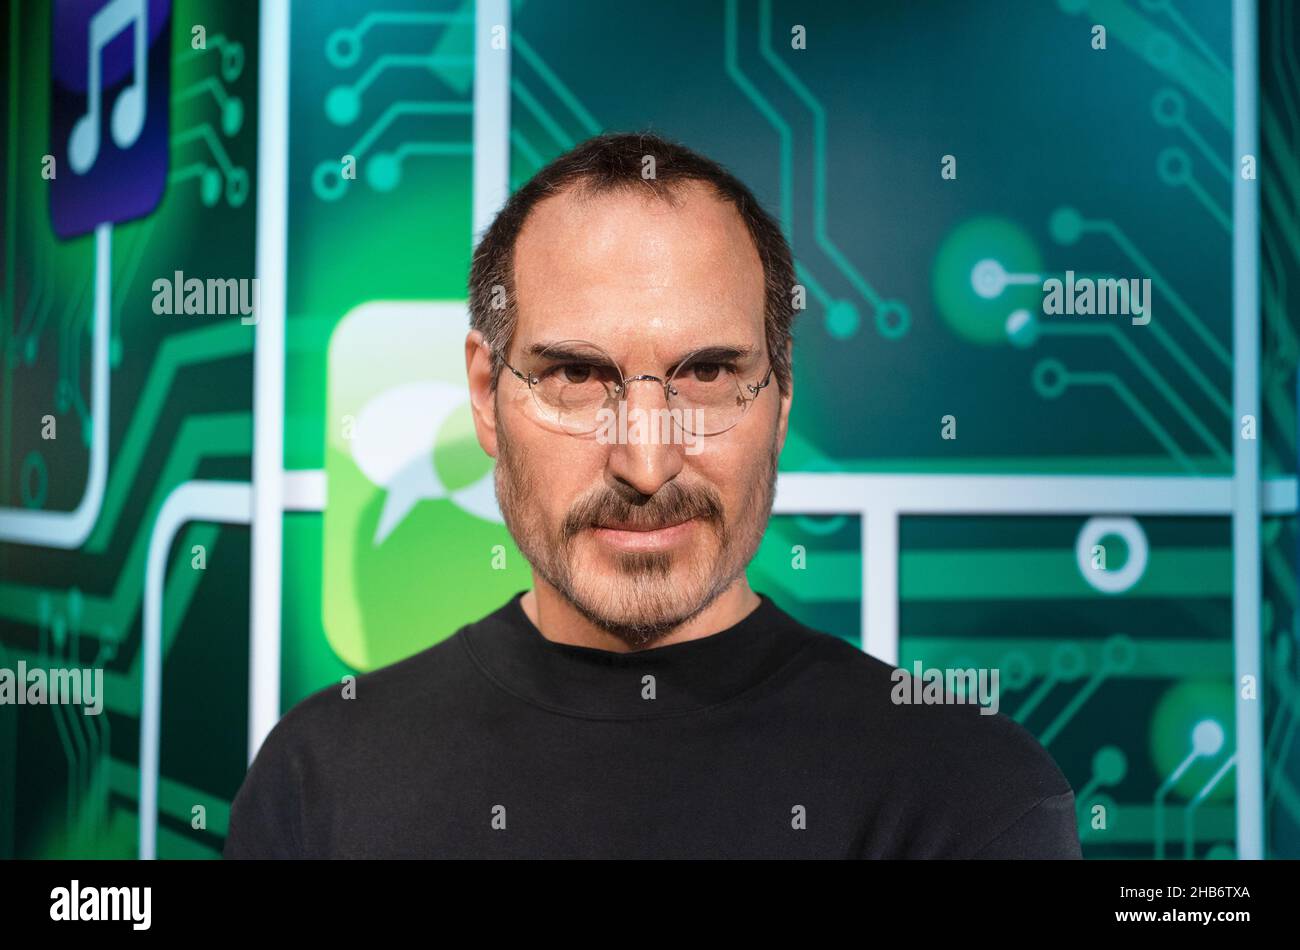 Steve Jobs wax sculpture at Madame Tussauds Istanbul. Stock Photo